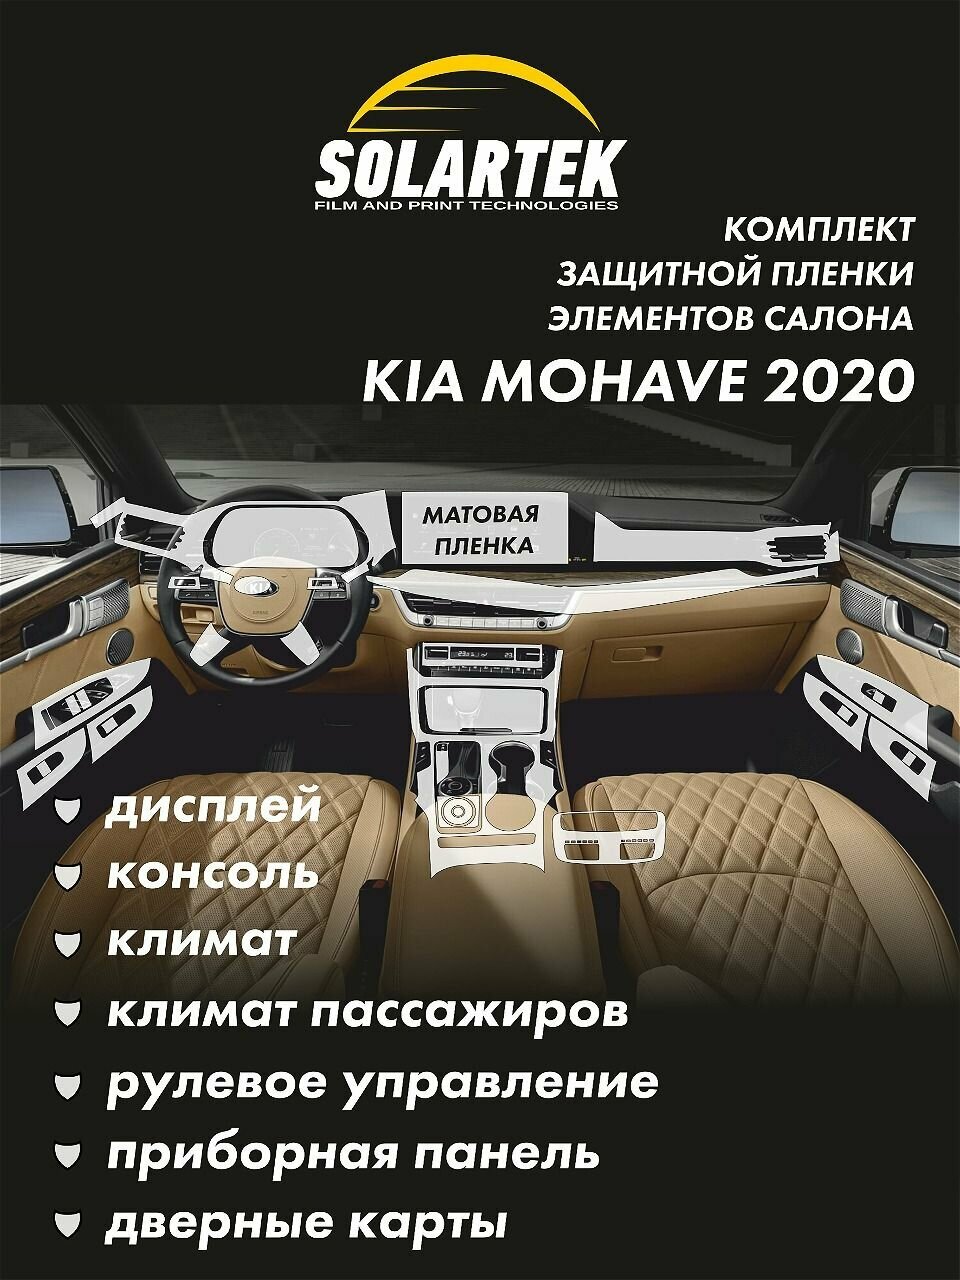 KIA MOHAVE 2020 Комплект защитных глянцевых пленок - полный набор